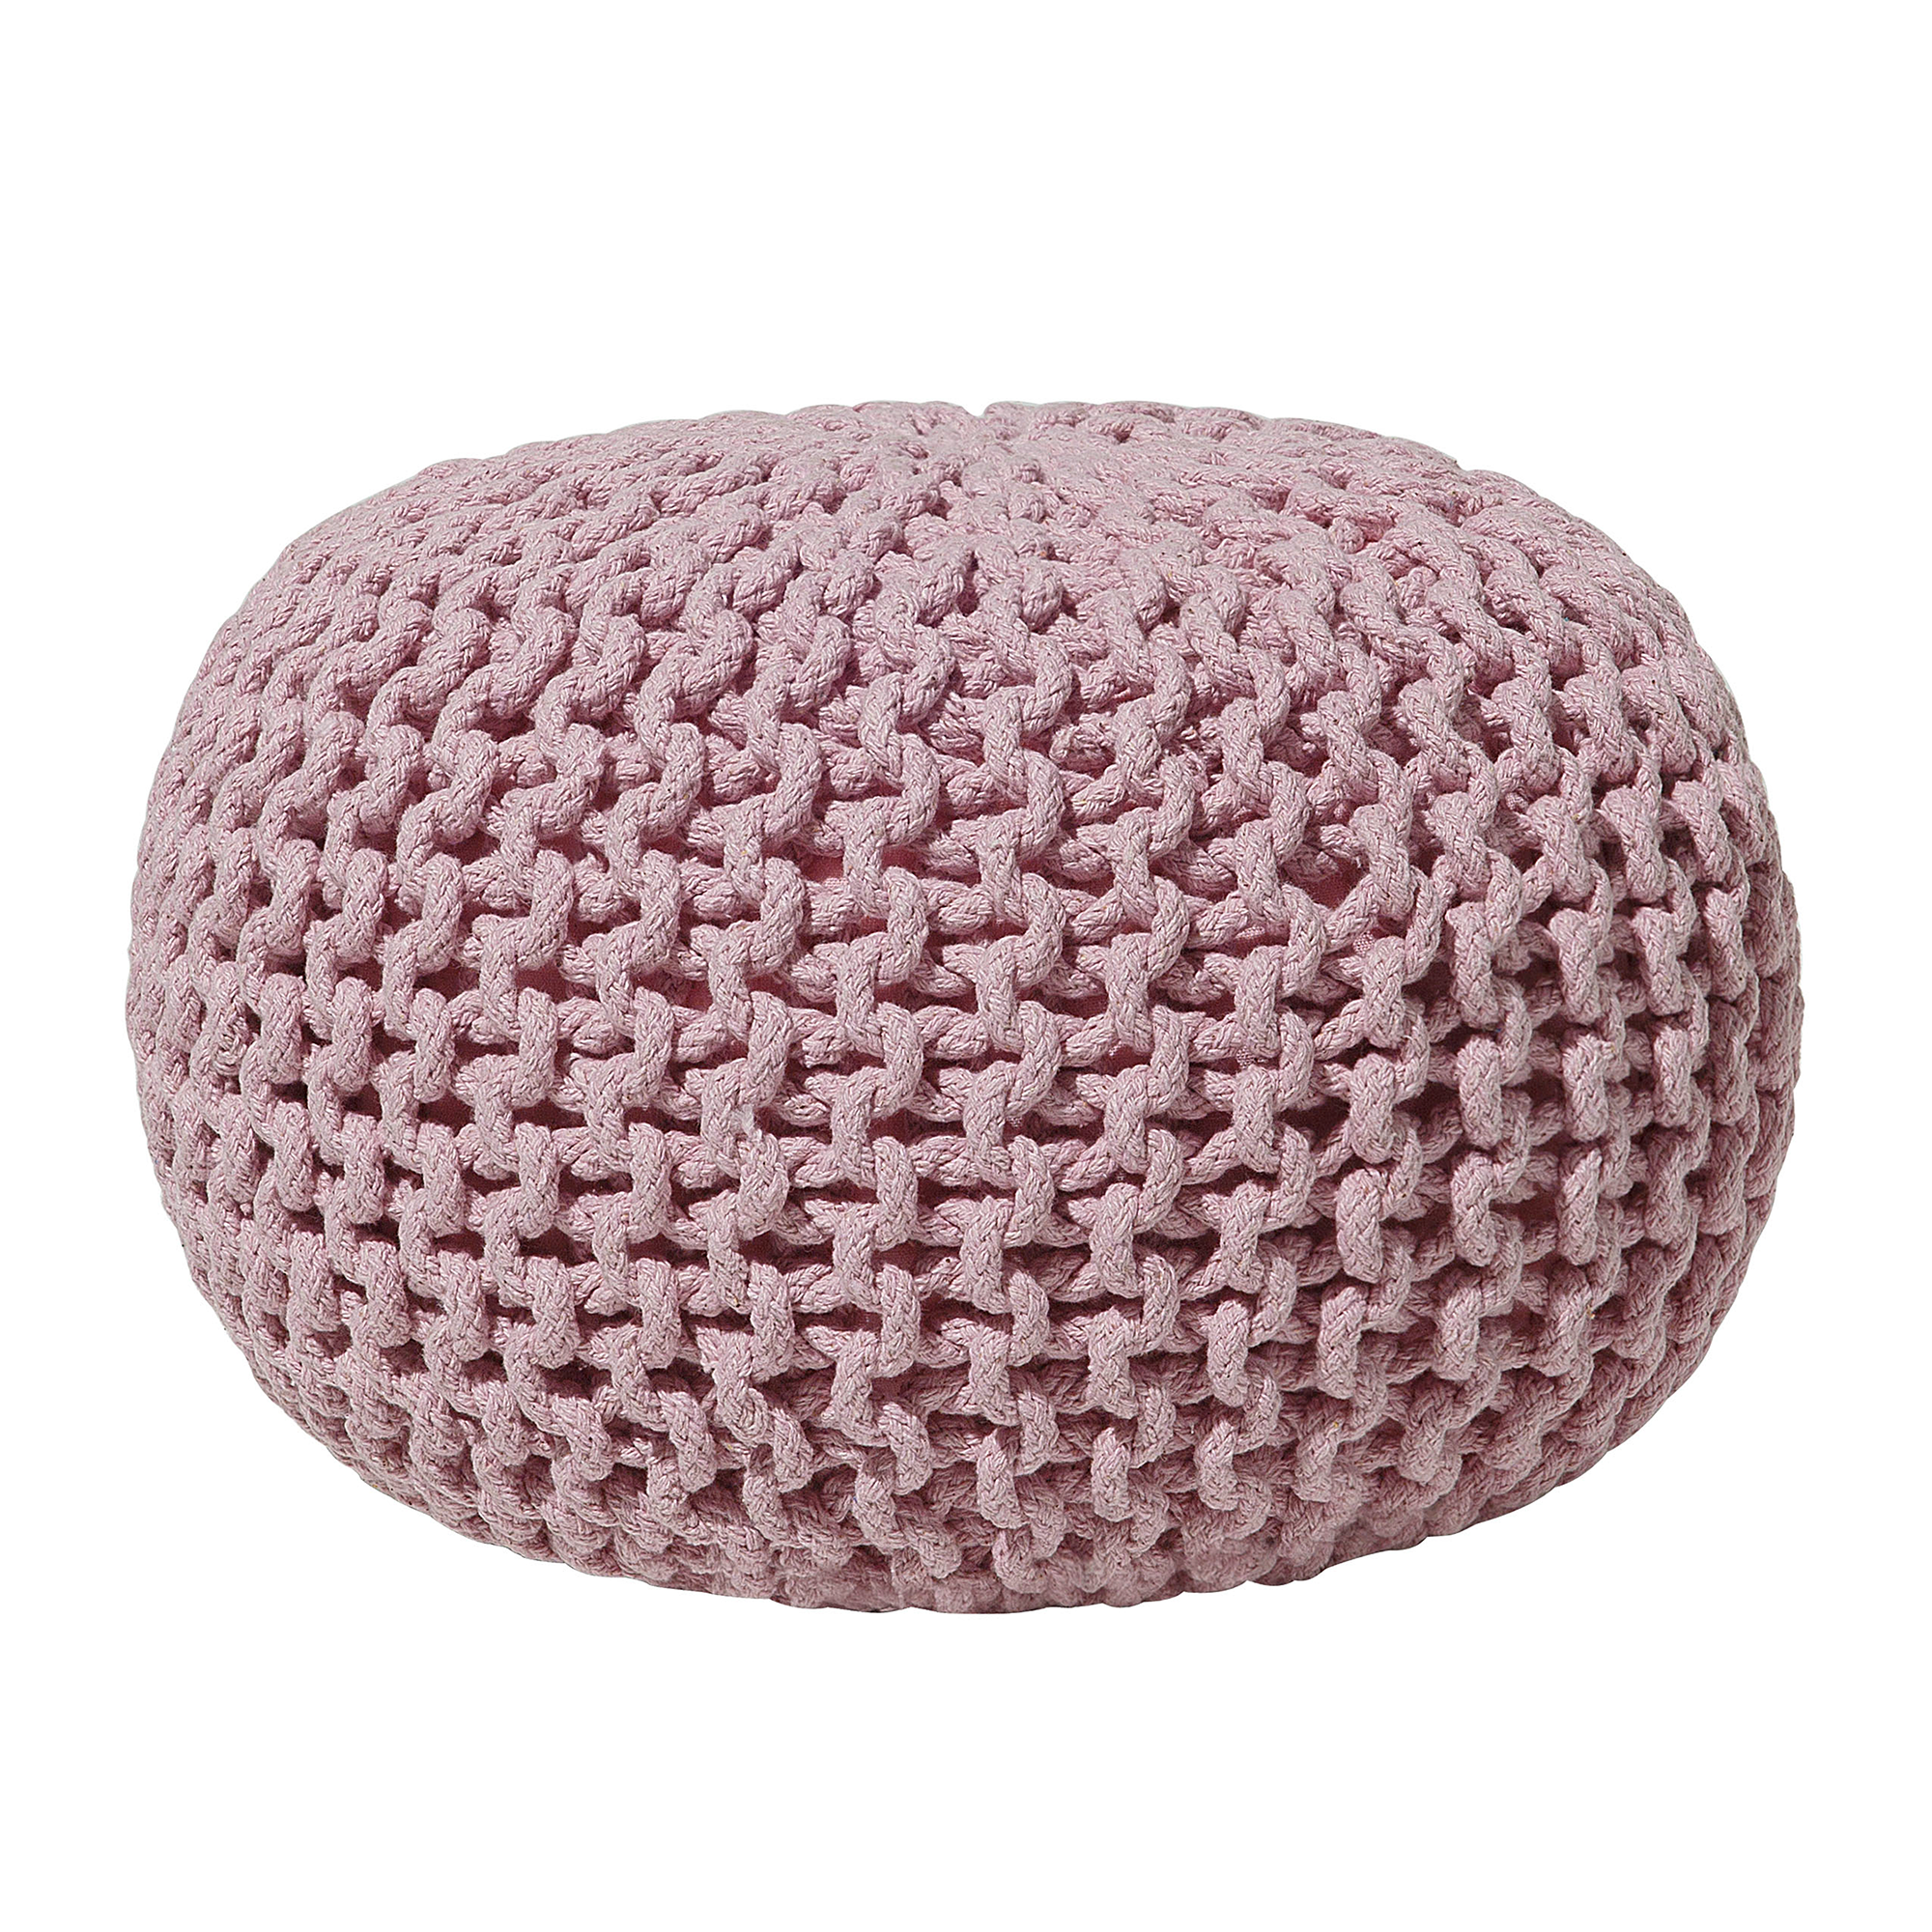 Beliani Pouf Ottoman Pink Knitted Cotton EPS Beads Filling Round Small Footstool 40 x 25 cm